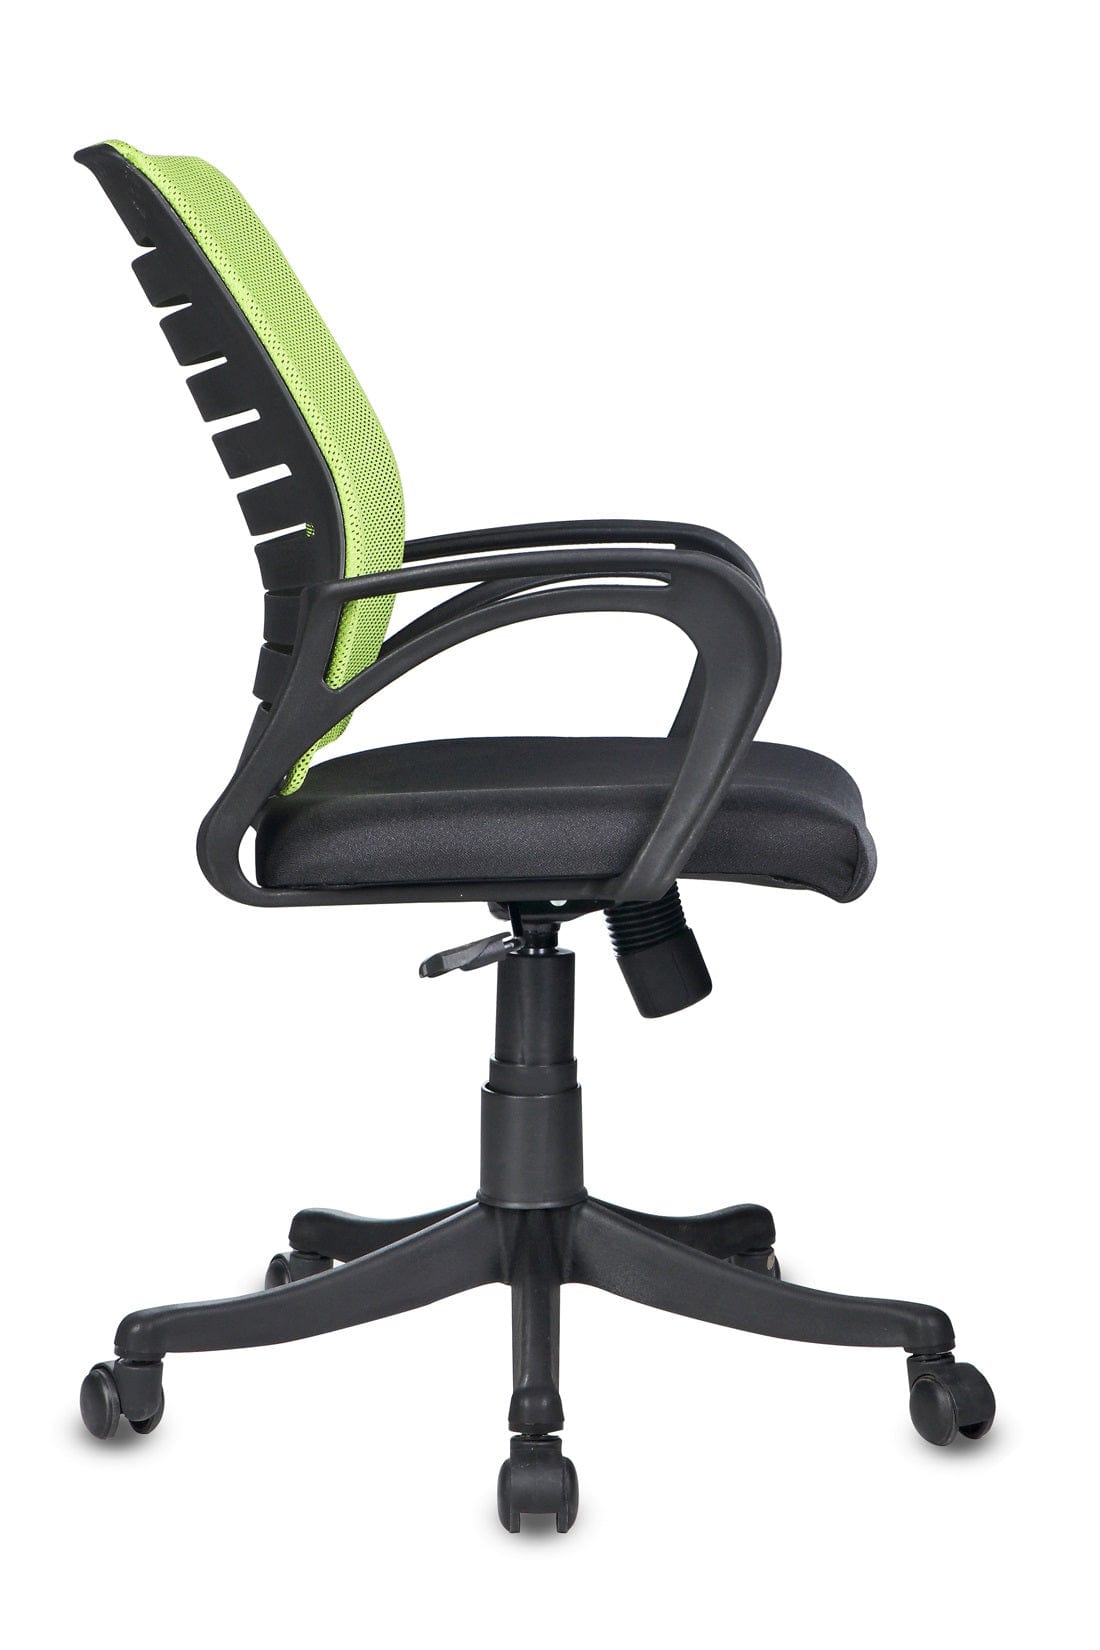 Adiko Superb Mesh chair in Green